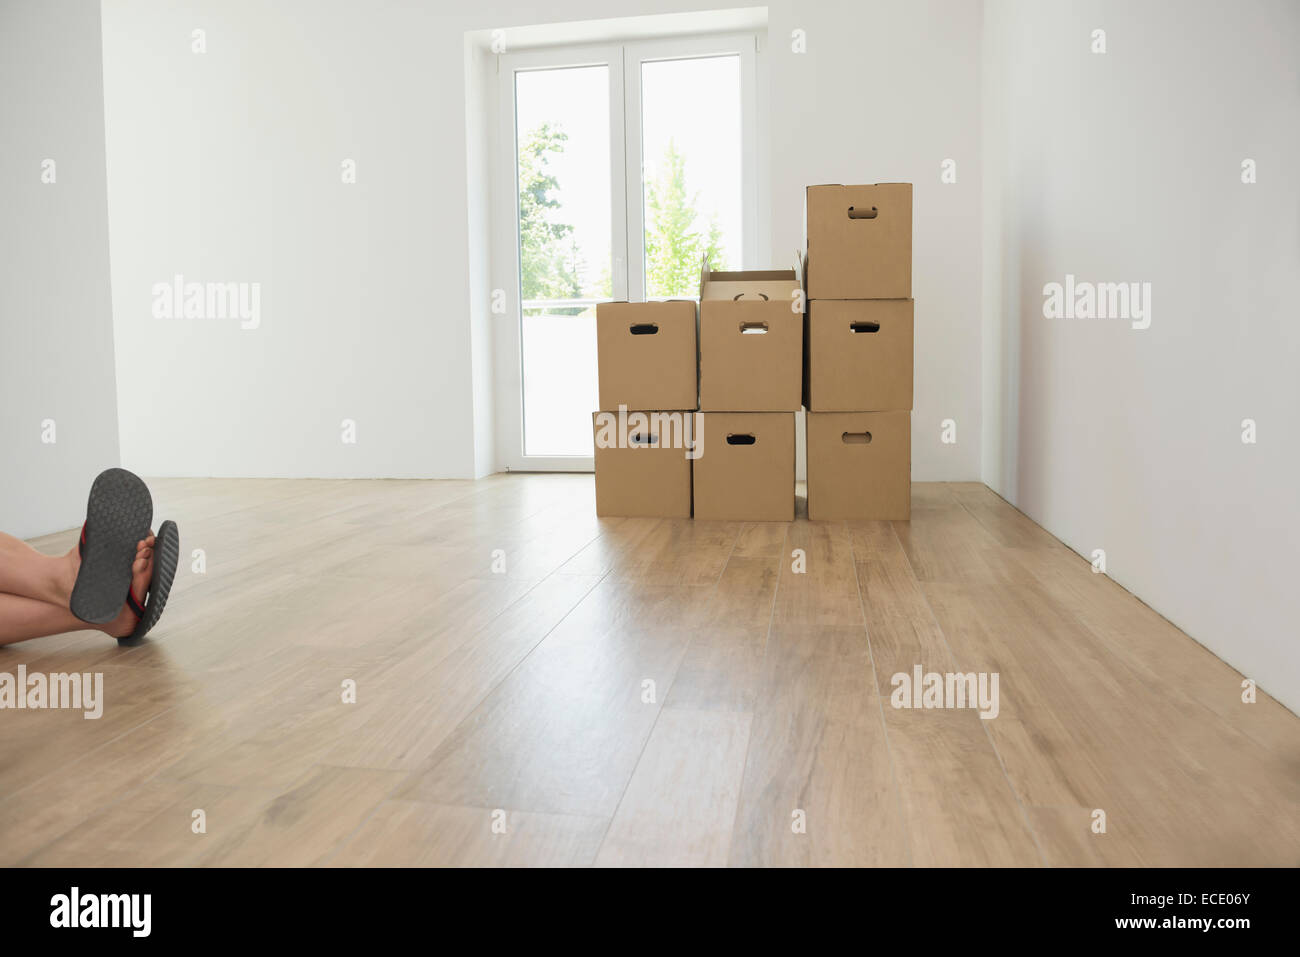 Empty room cardboard boxes wooden floor feet Stock Photo